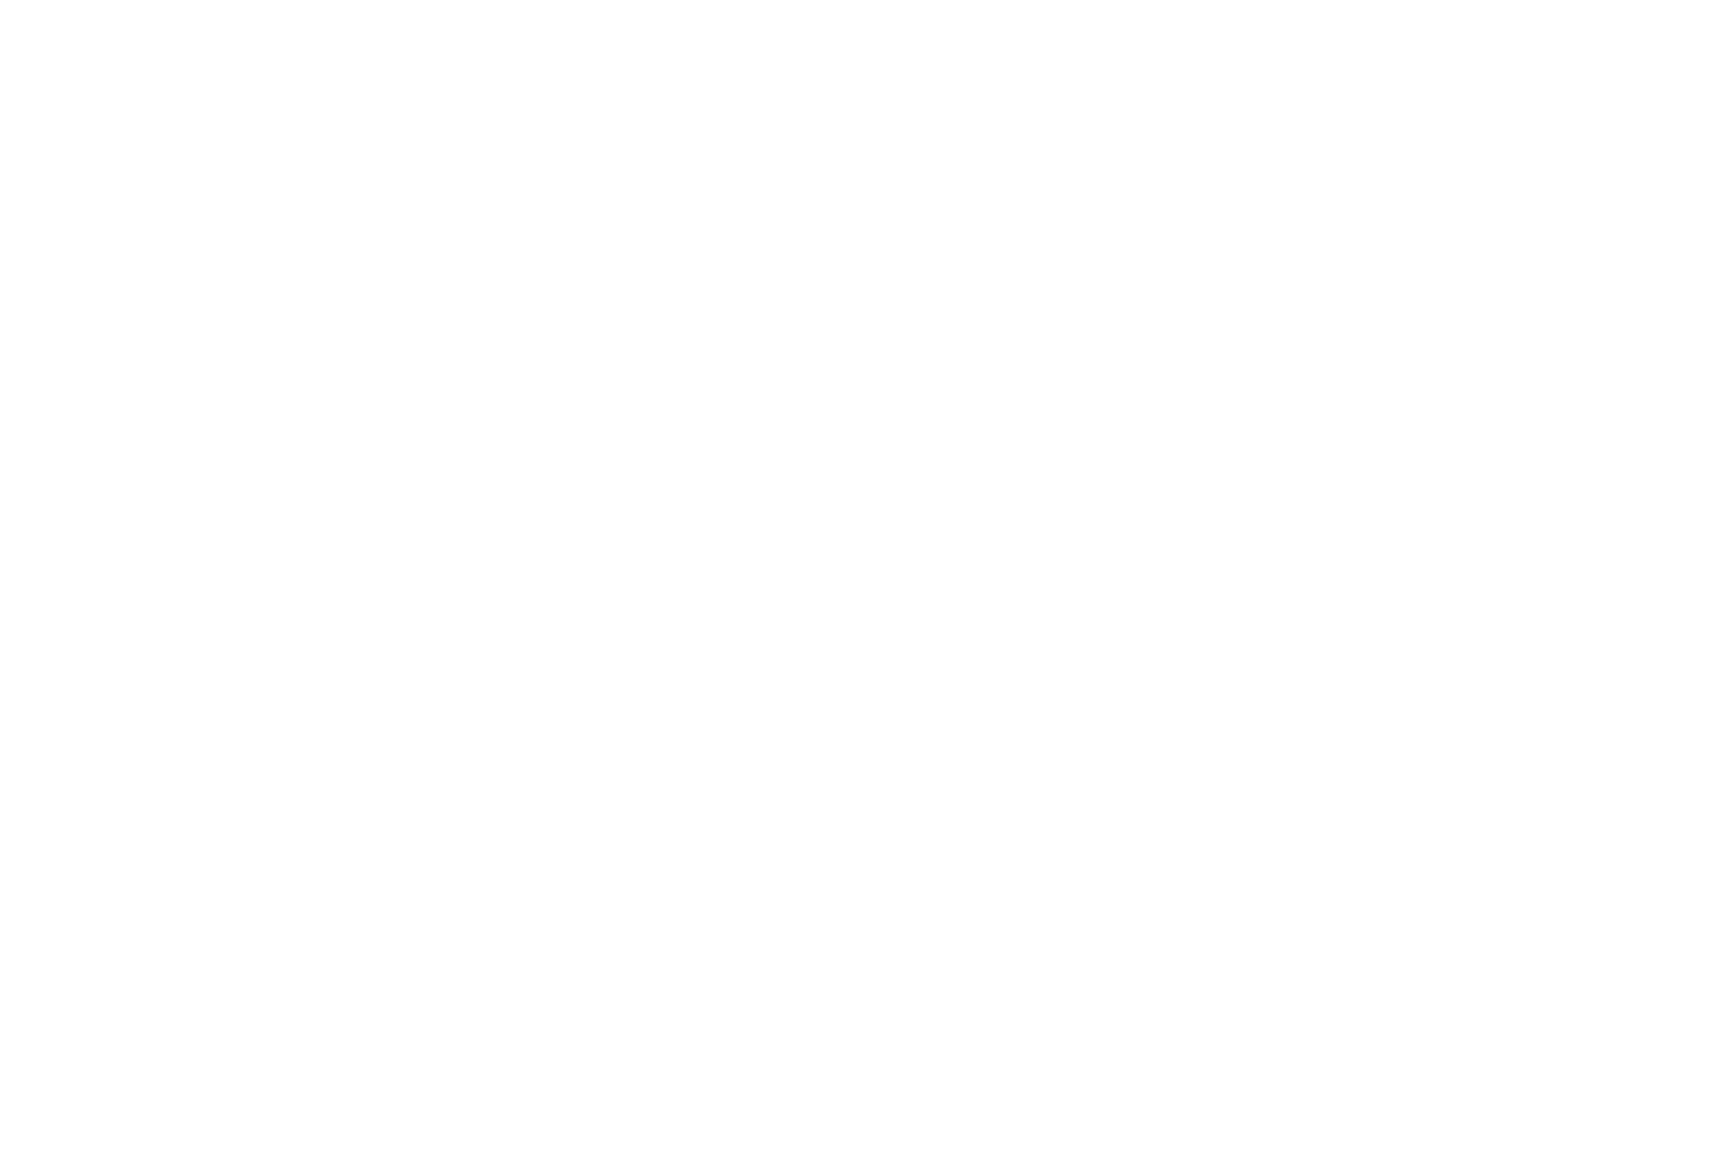 Official Selection Palm Beach International Film Festival